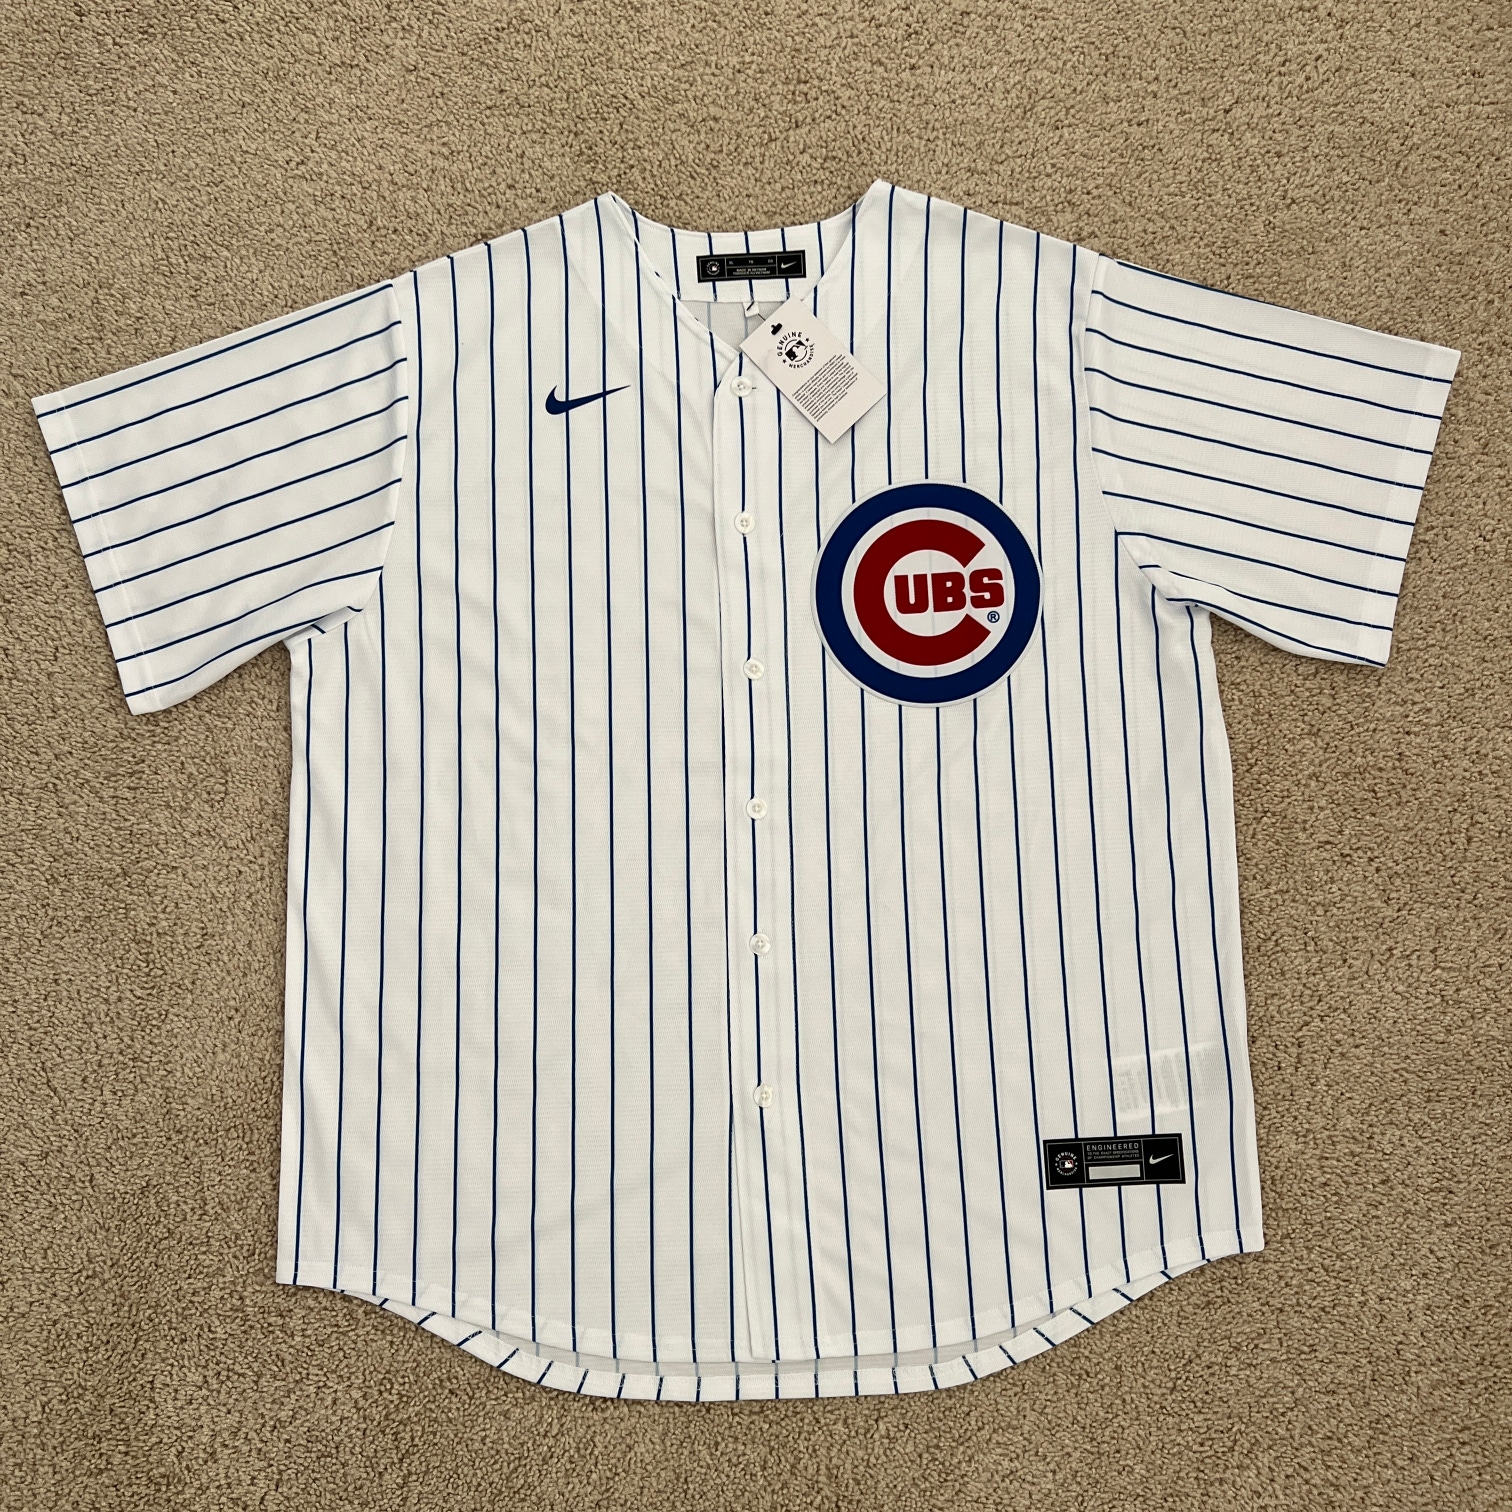 Nike Chicago Cubs Genuine MLB Baseball White Home Jersey Men’s Size XL